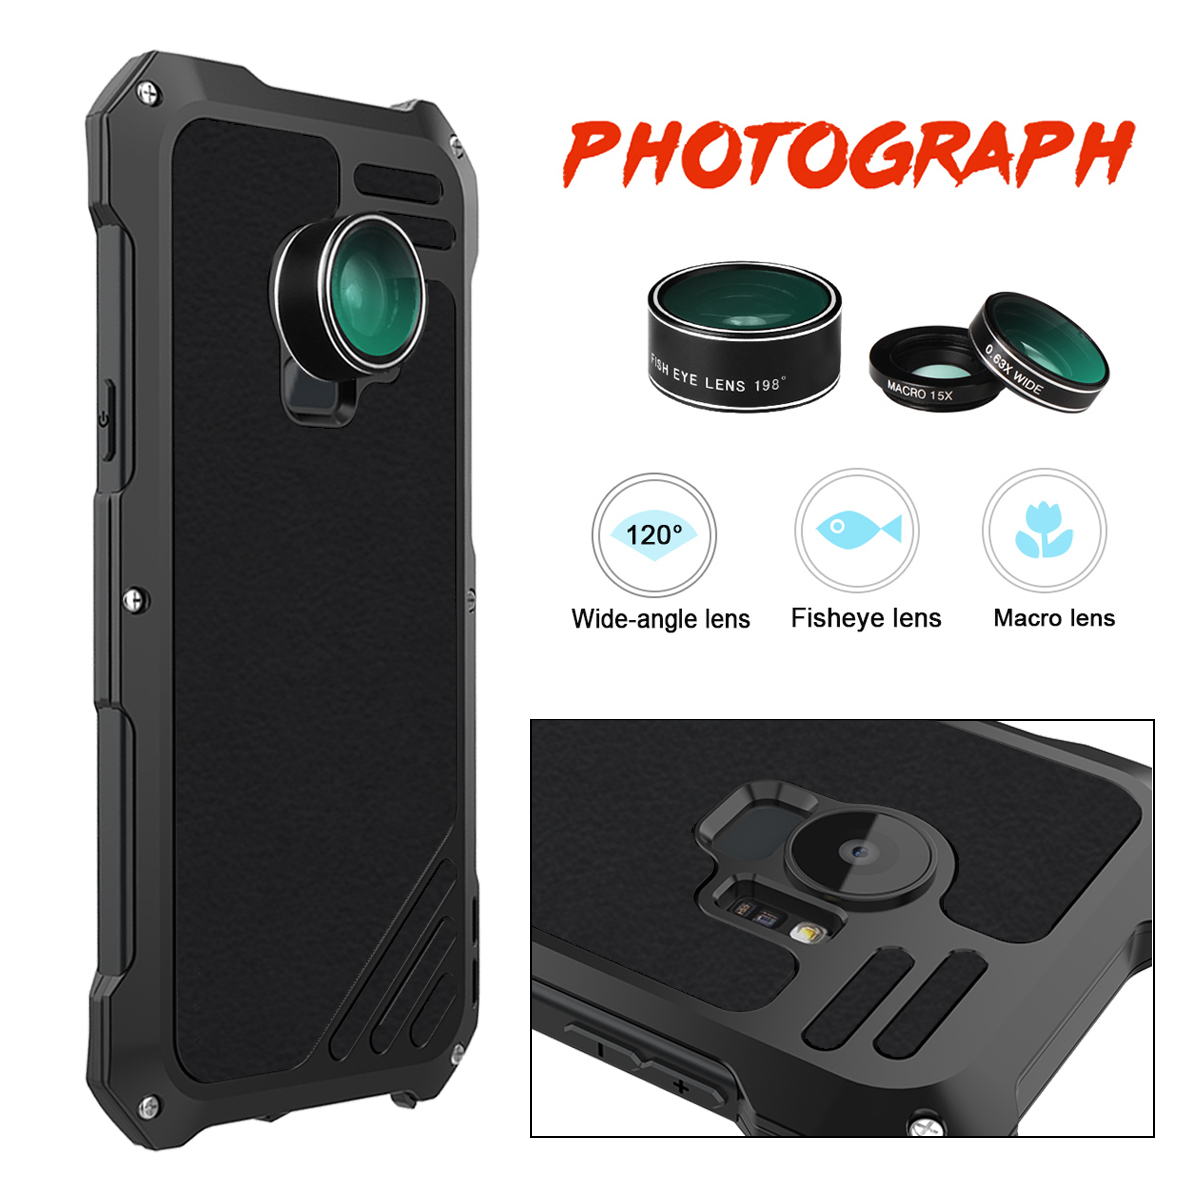 198deg-Fisheye-Lens15X-Macro-LensWide-Angle-LensAluminum-Protective-Case-For-Samsung-Galaxy-S9-Plus-1293585